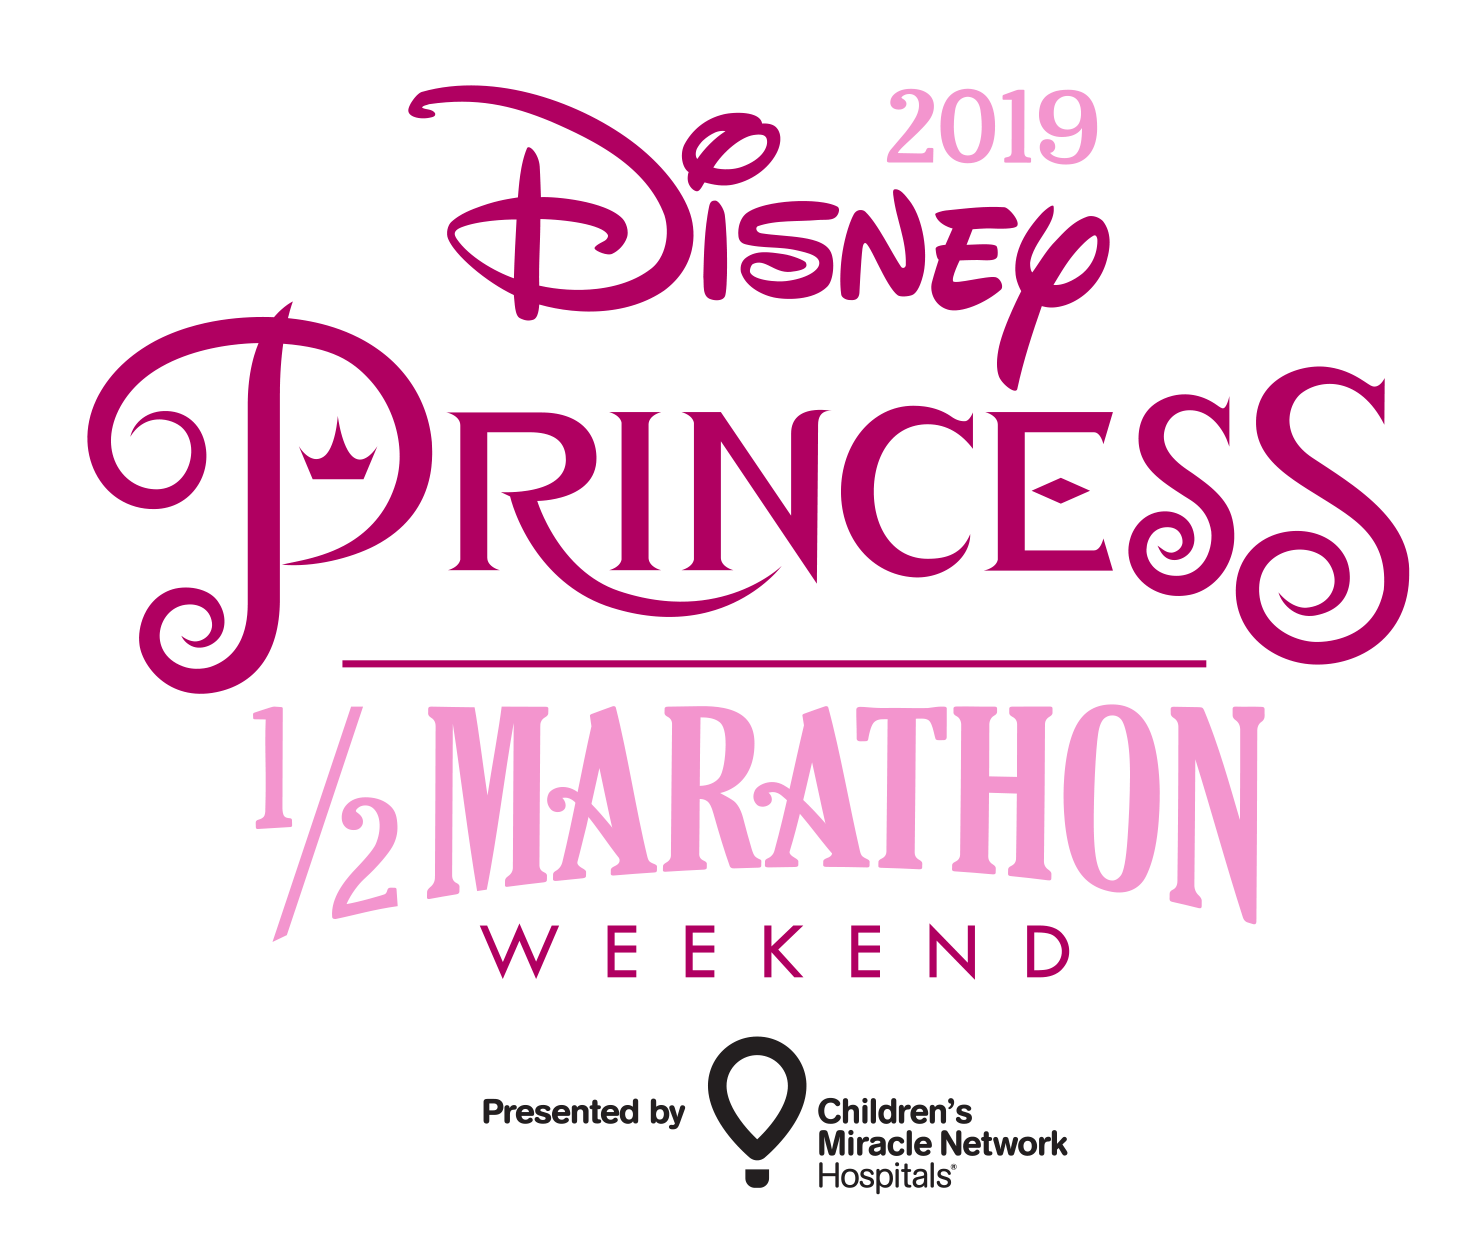 New Disney Princess Logo - Wish Upon a Star | Disney Princess Half Marathon Weekend | Wish Upon ...